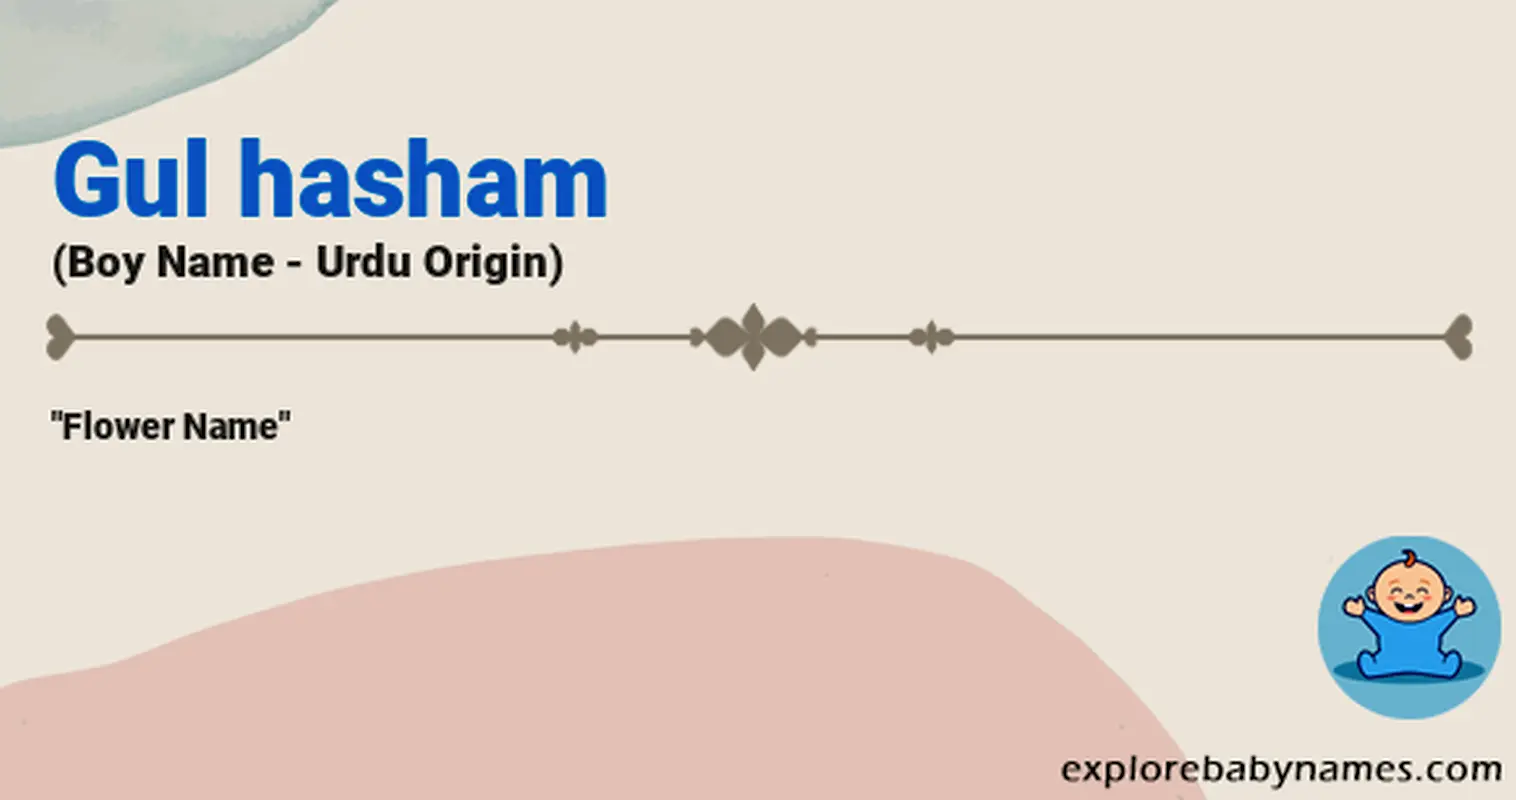 Meaning of Gul hasham